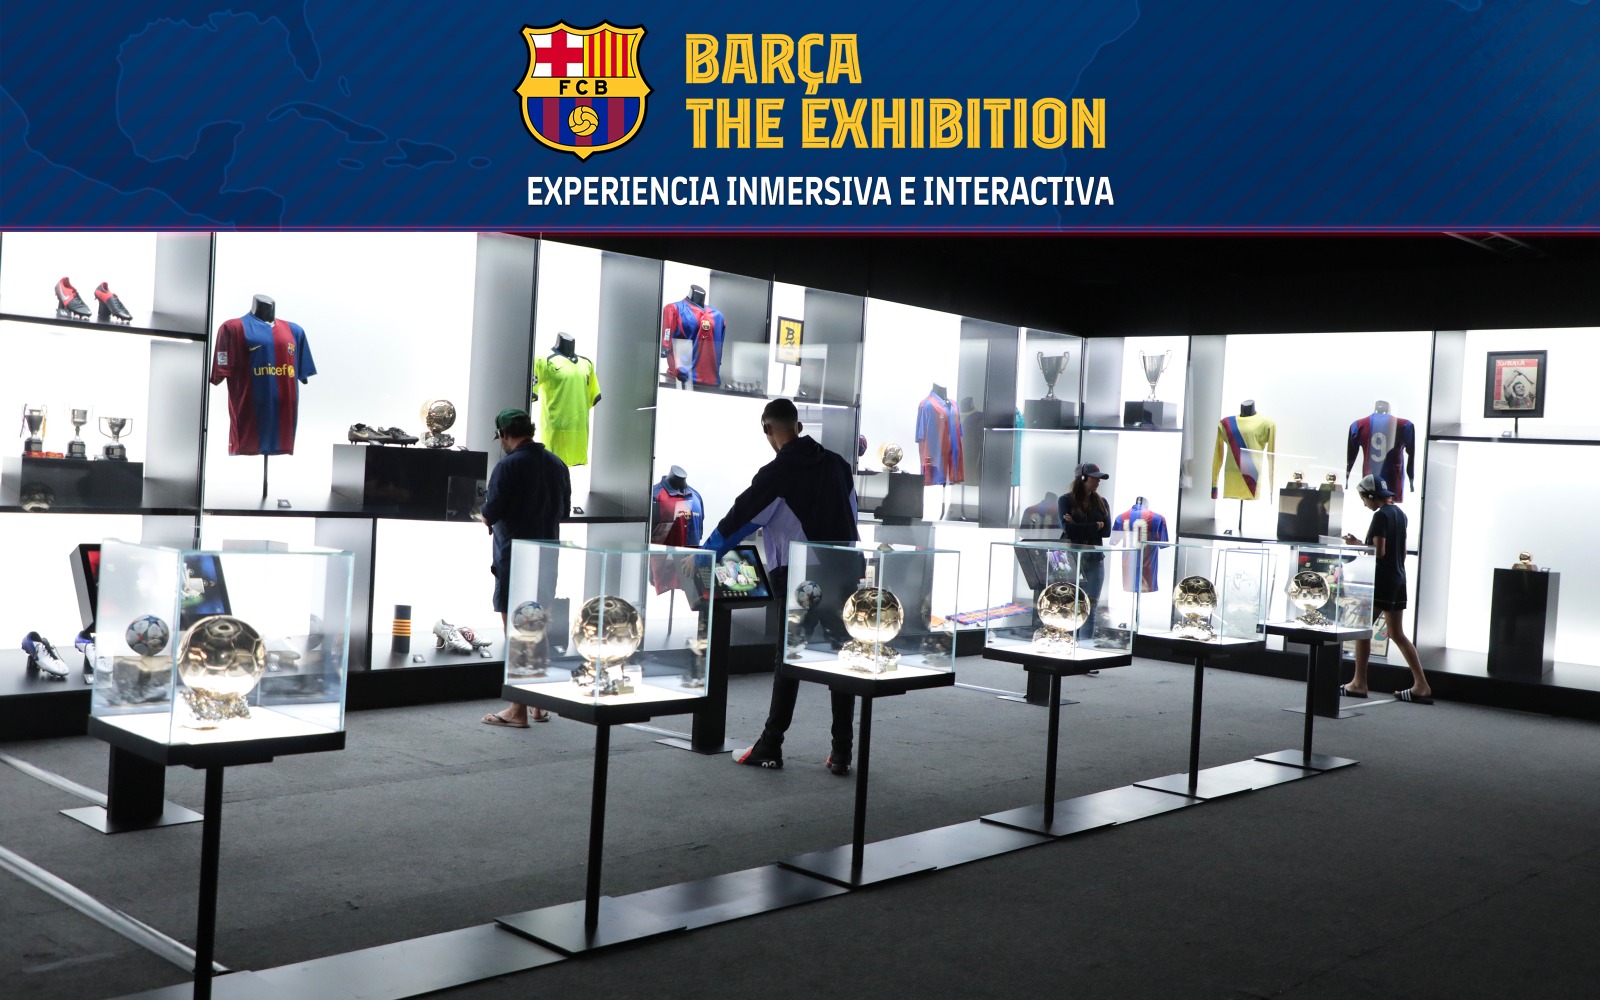 Barça The Exhibition' arrives in Guadalajara, Mexico